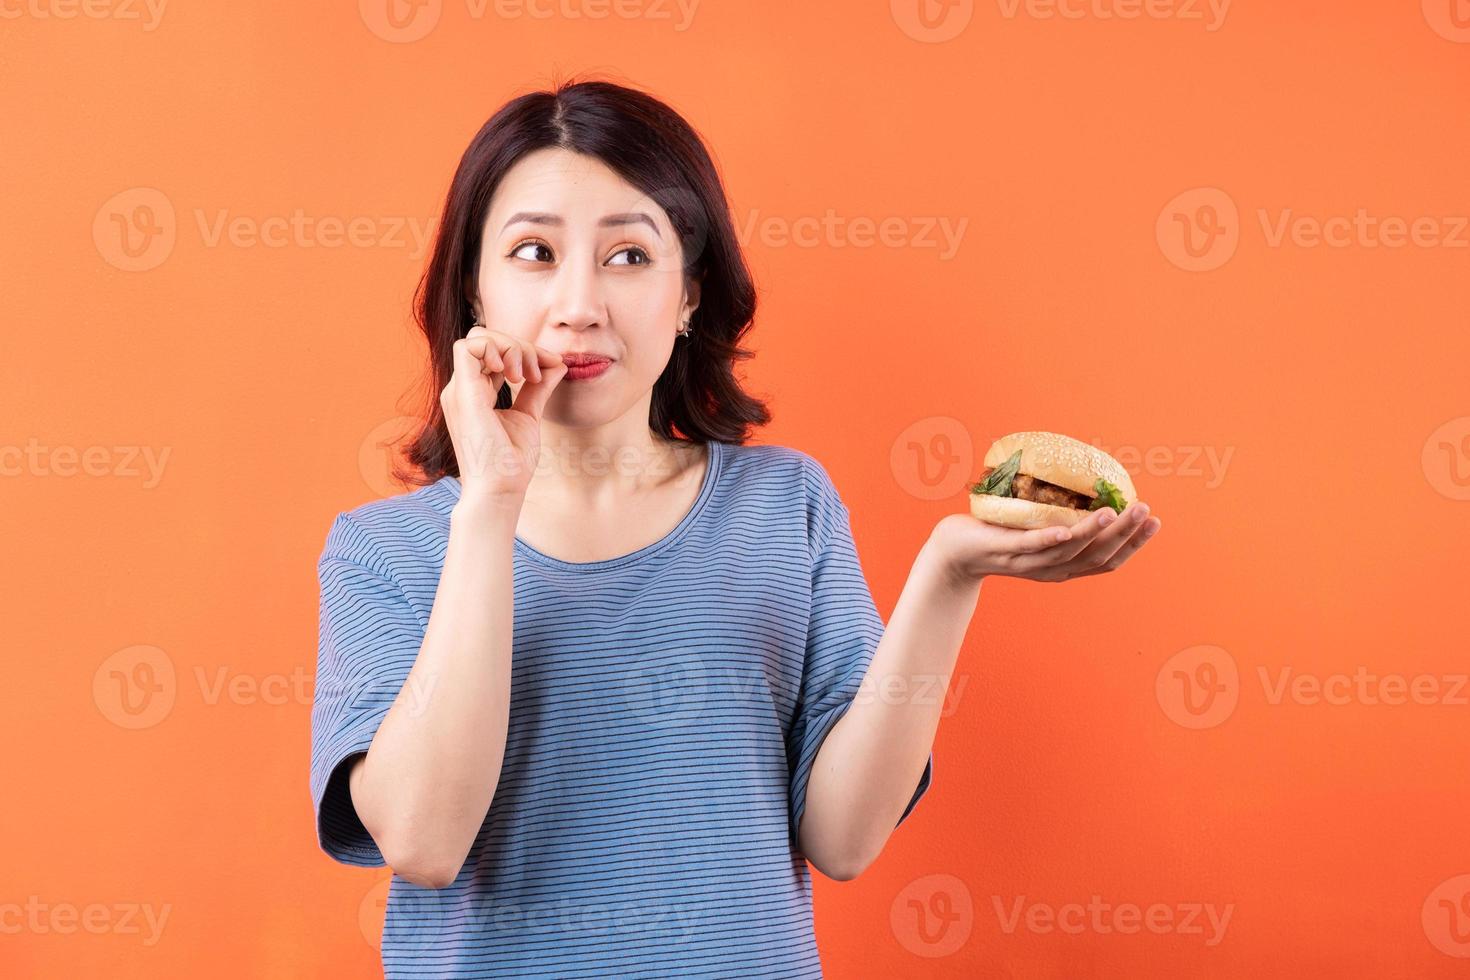 jovem mulher asiática comendo hambúrguer em fundo laranja foto